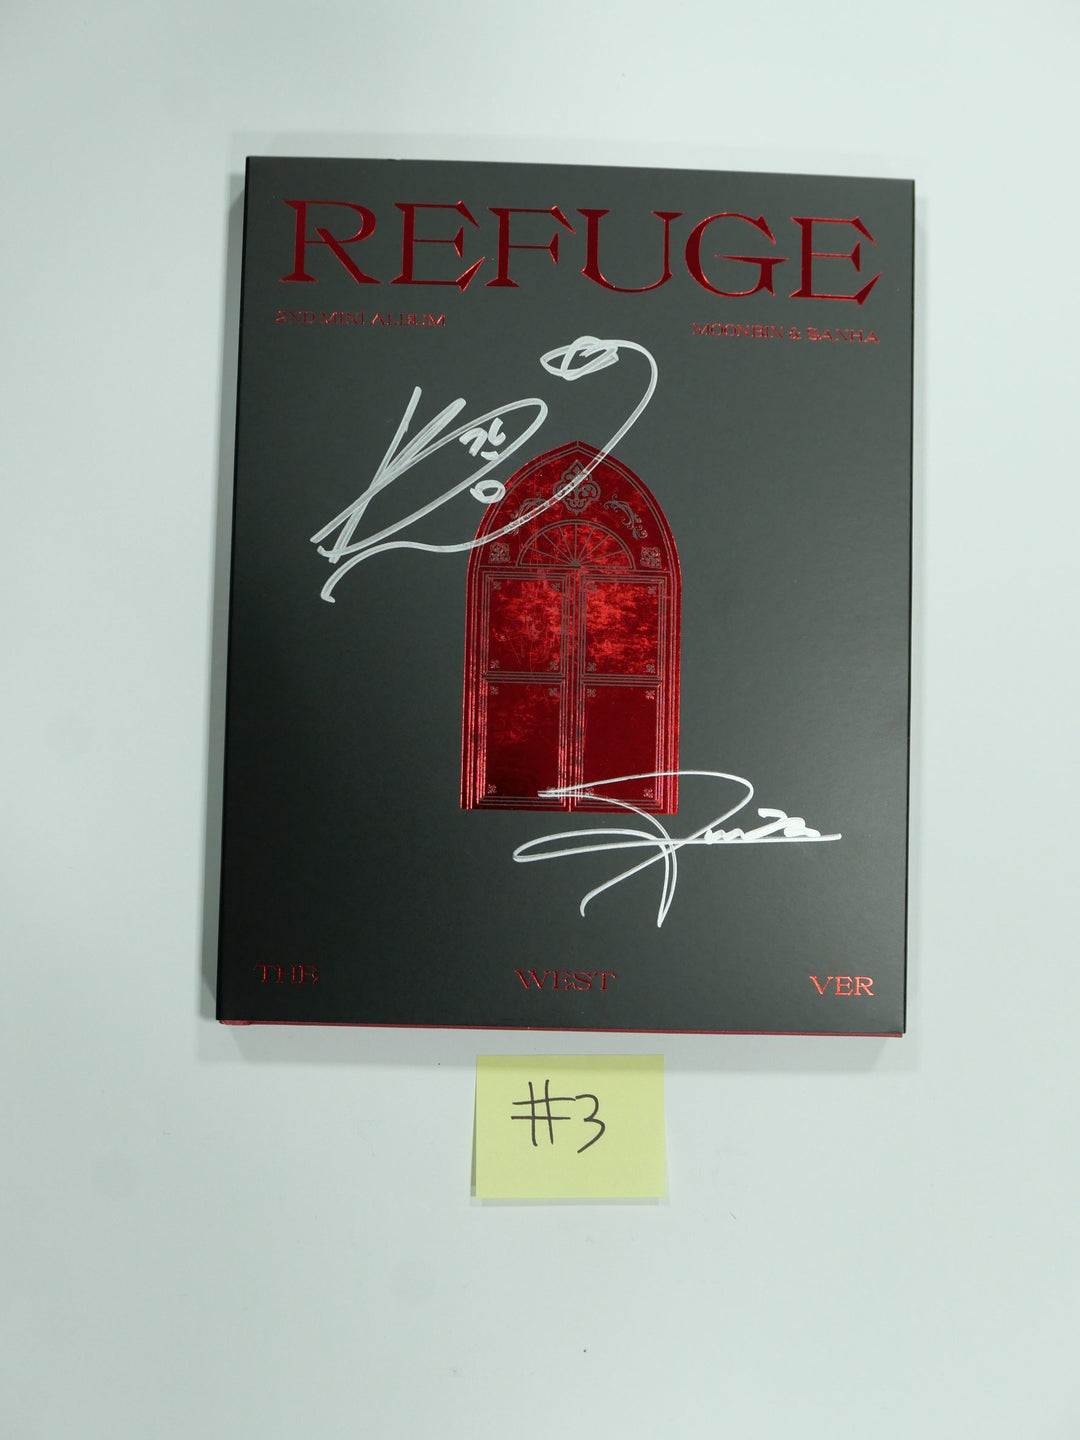 MOON BIN & Yoon SANHA "REFUGE" - Hand Autographed(Signed) Promo Album